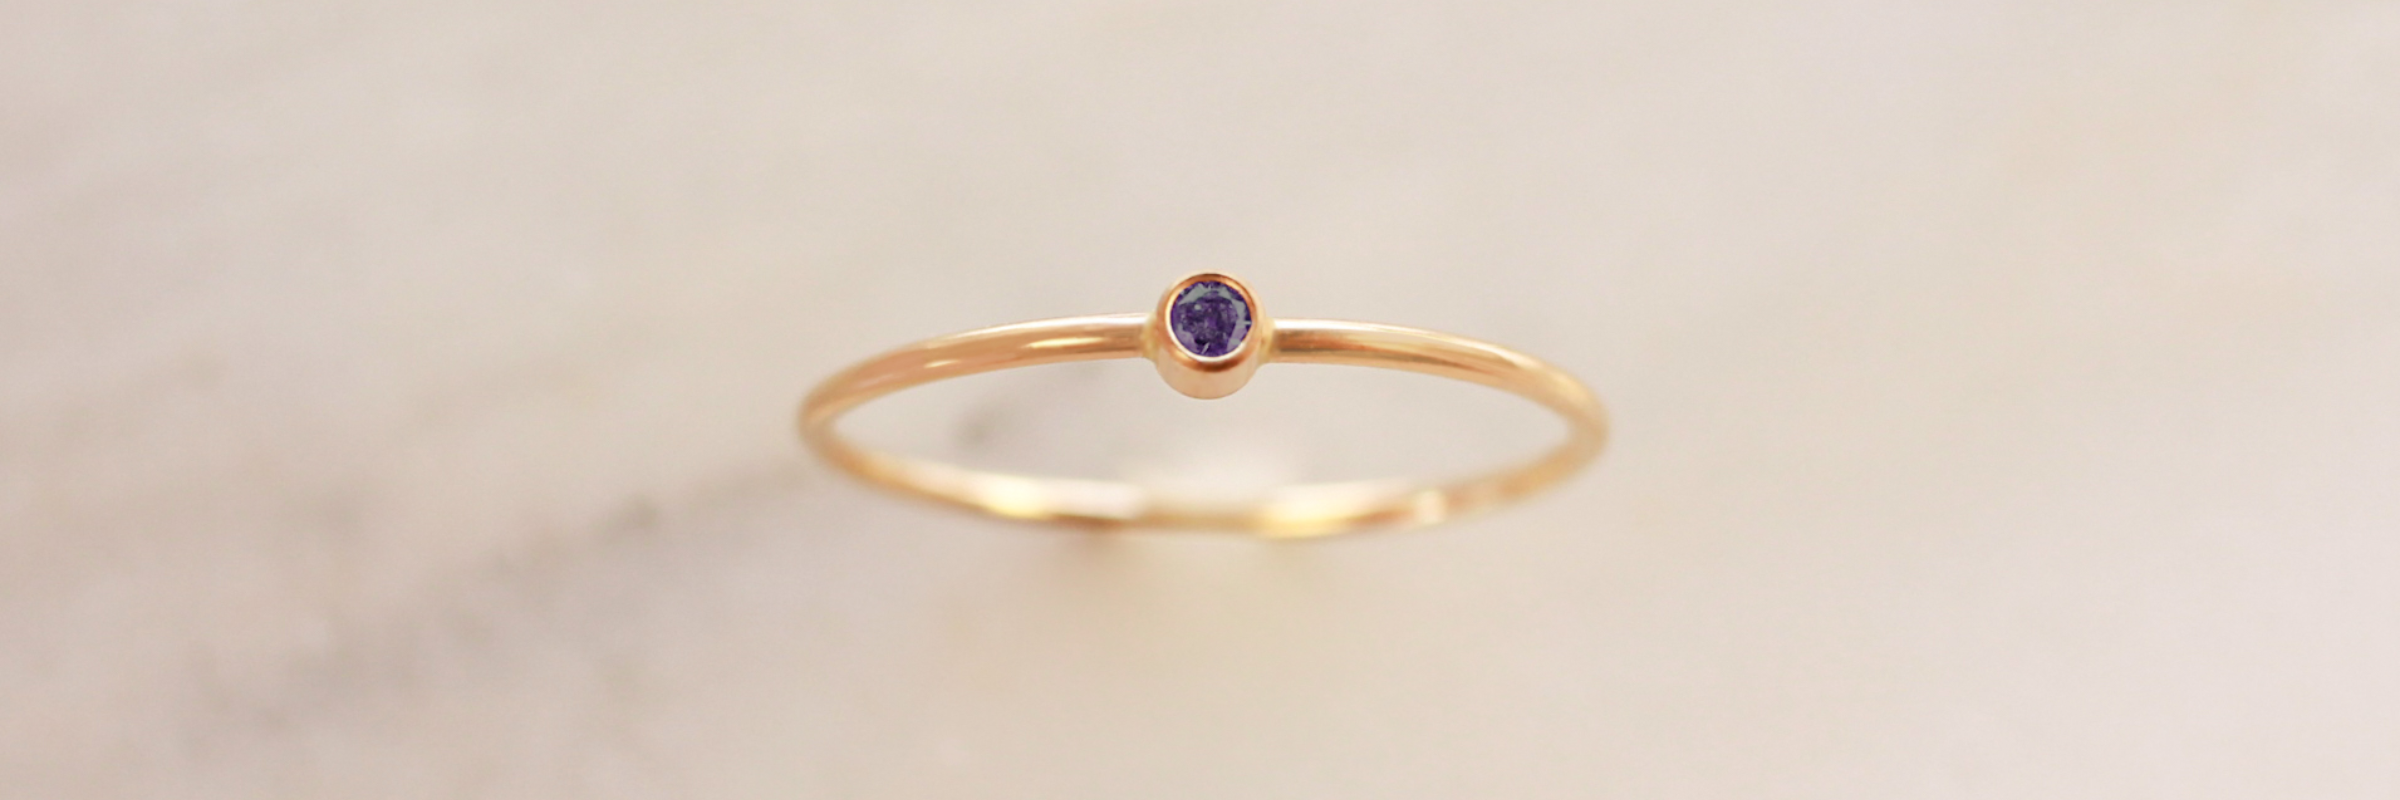 NOLIA Jewelry • Tiny February Birthstone Ring • Amethyst